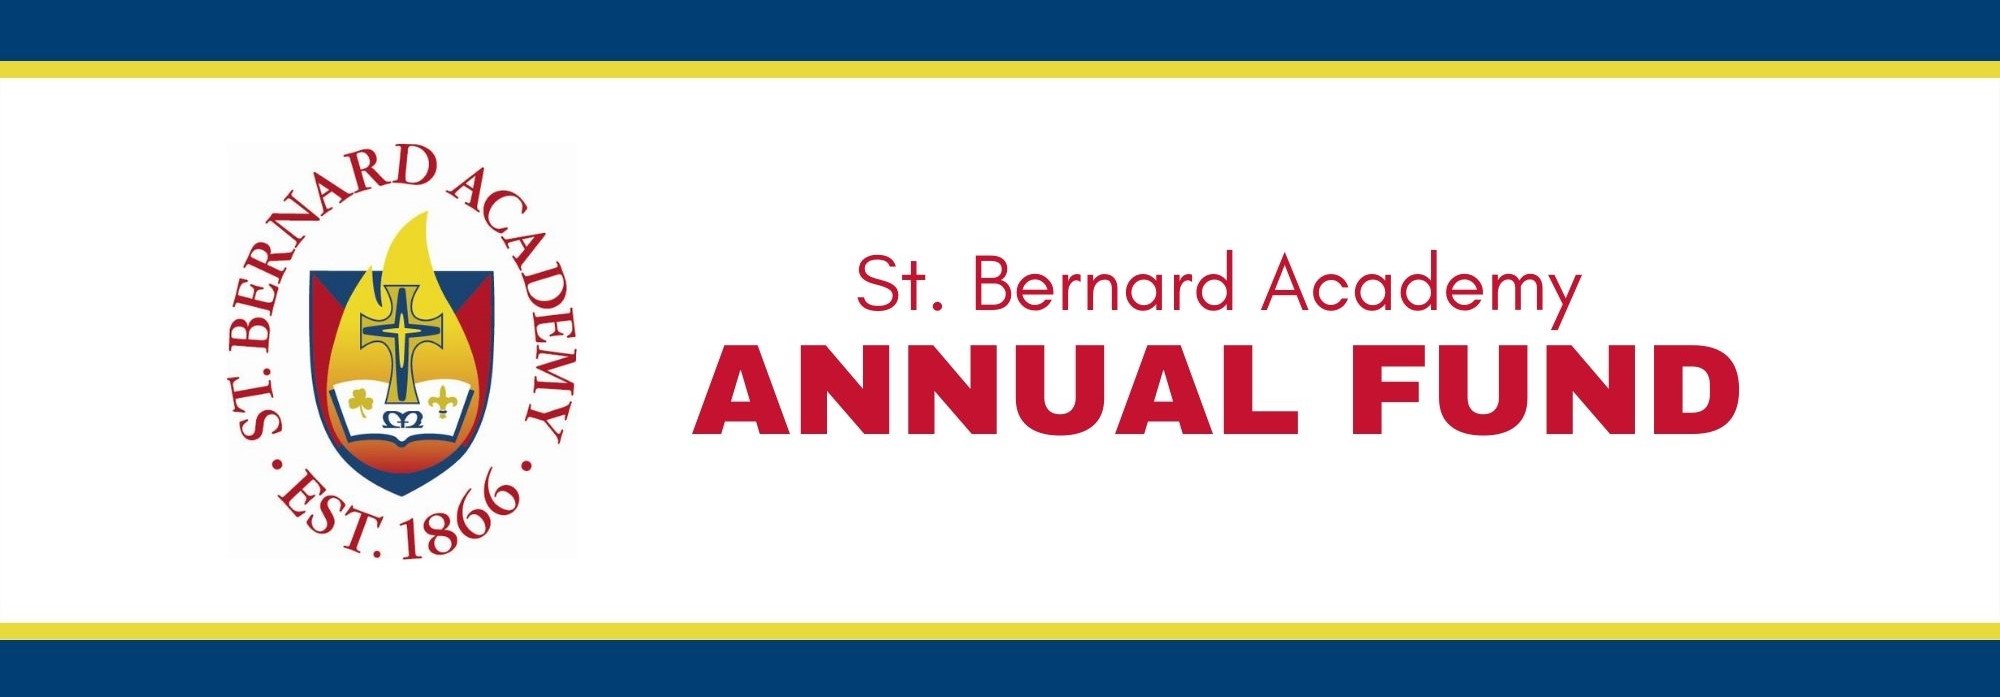 St. Bernard Academy Annual Fund